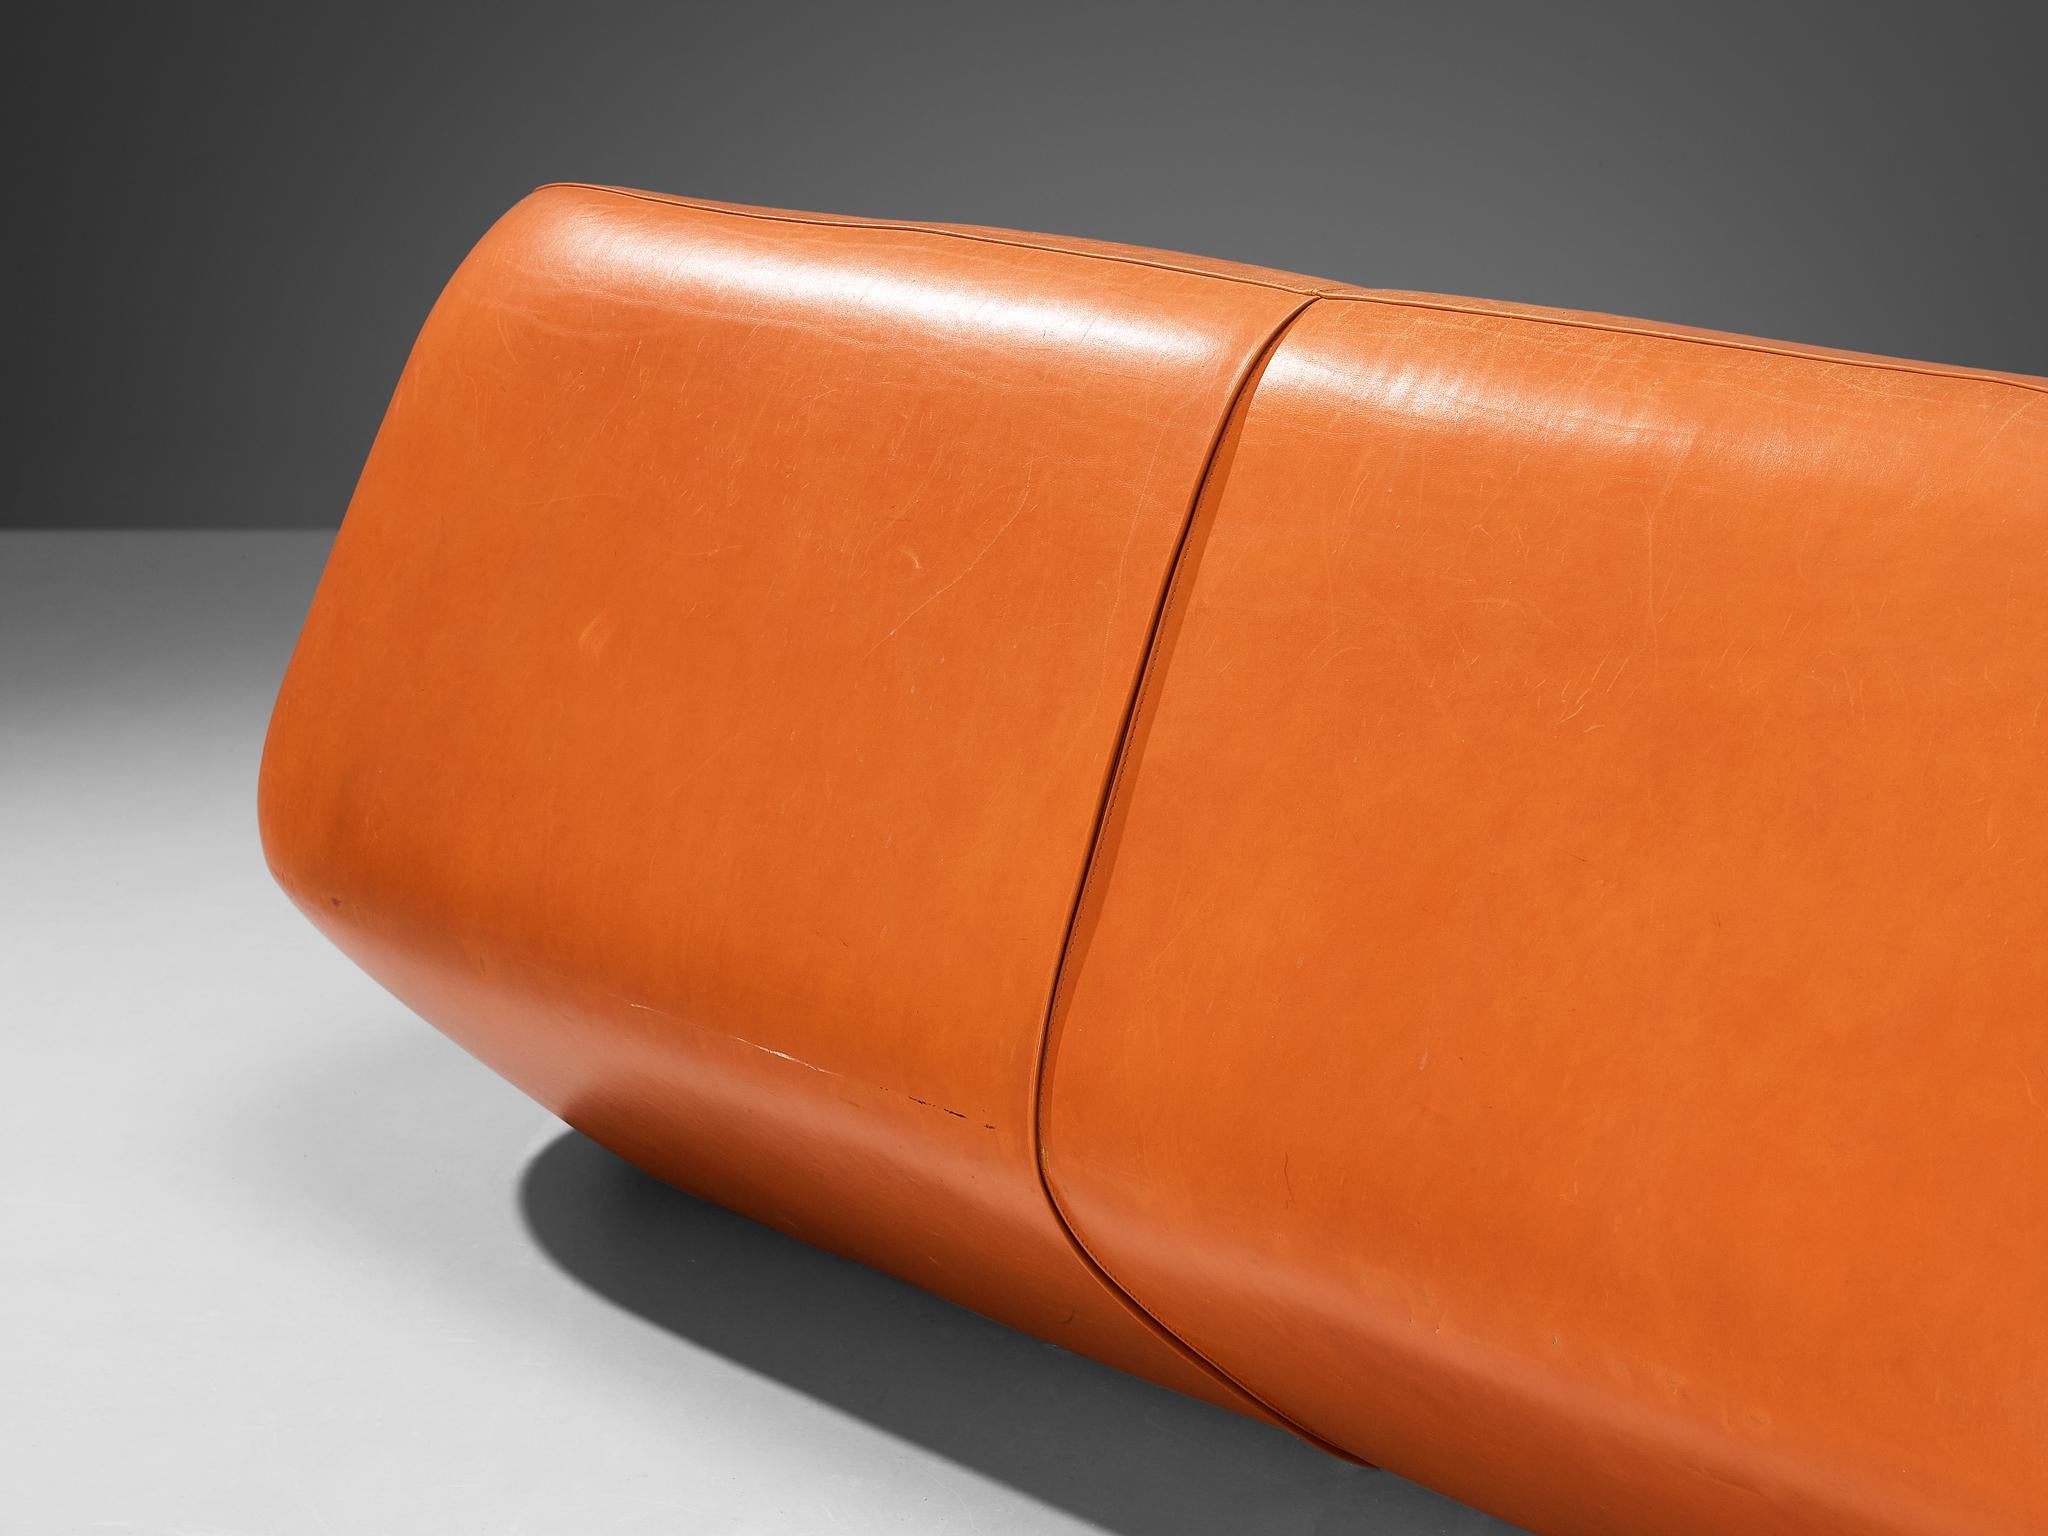 Late 20th Century Futuristic Three-Seat Sofa in Leather